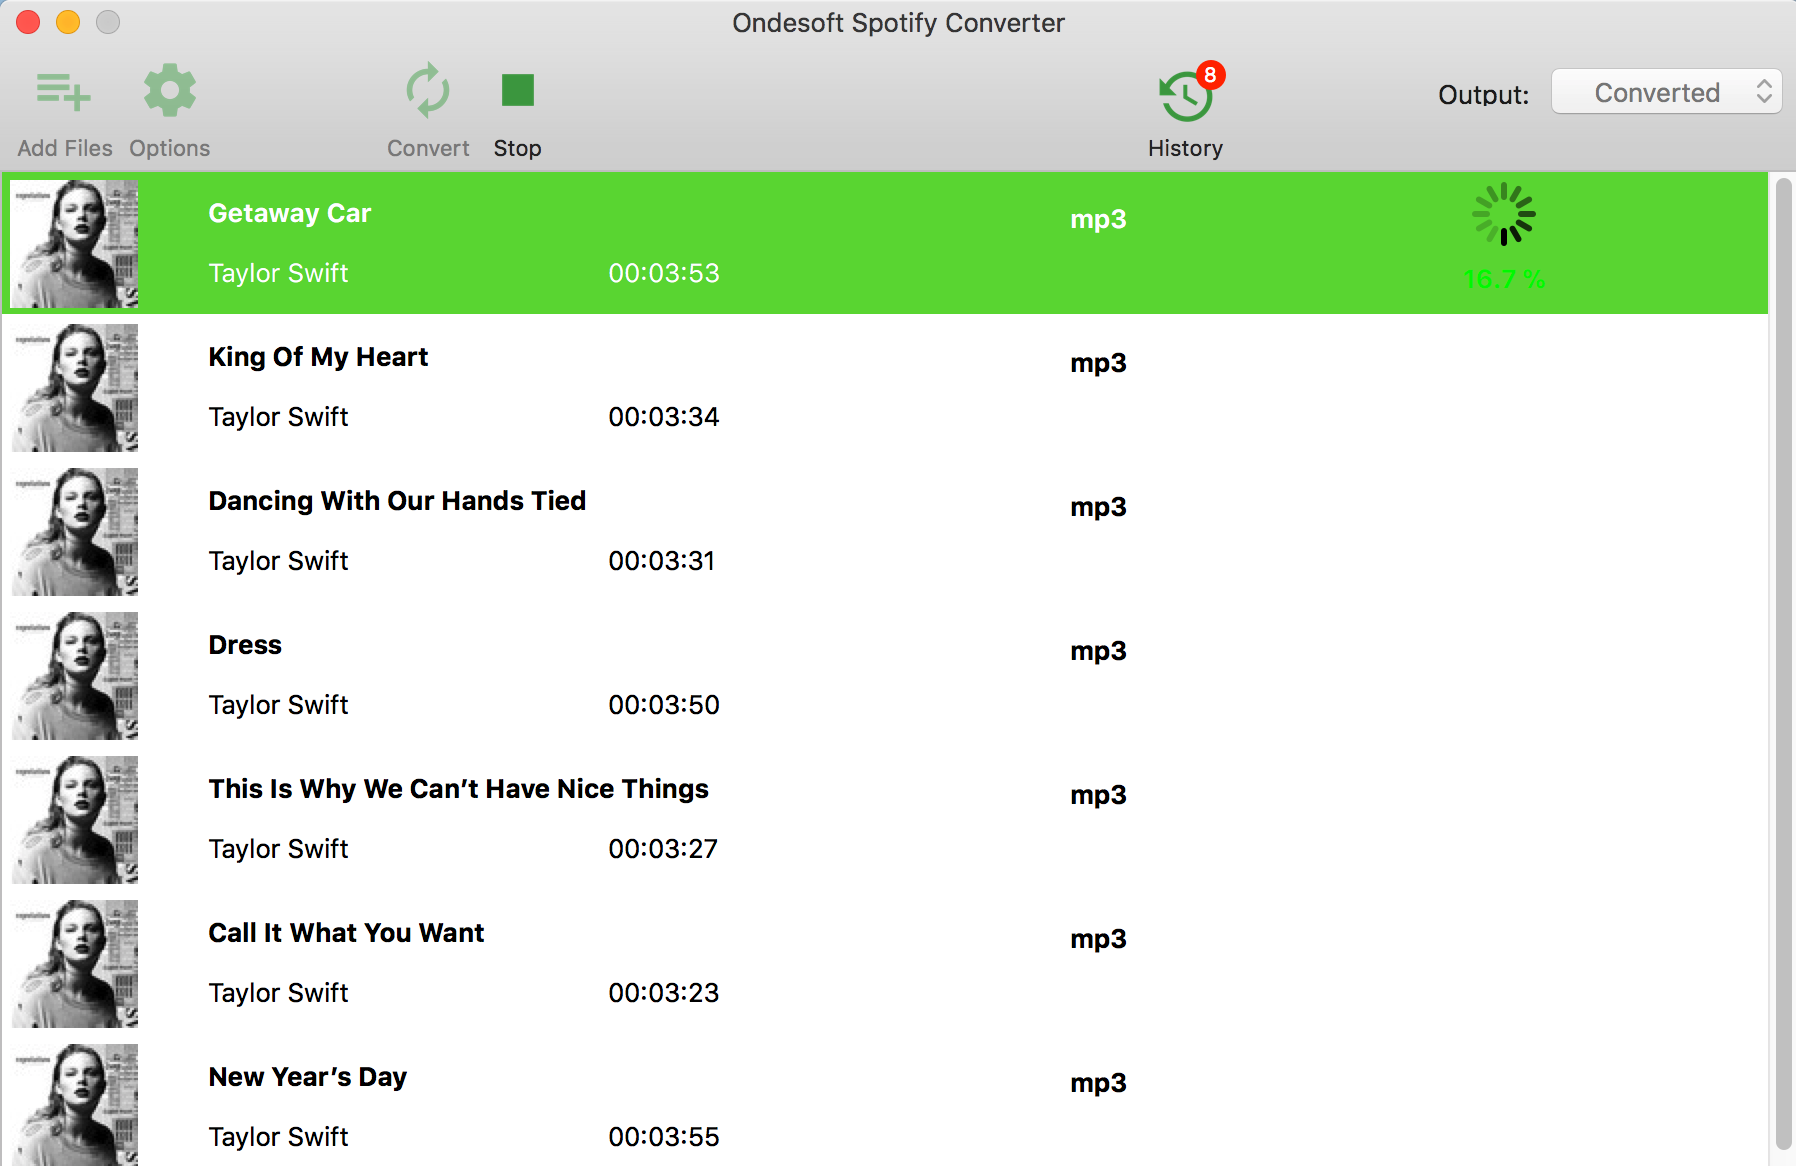 download drm-free Spotify music